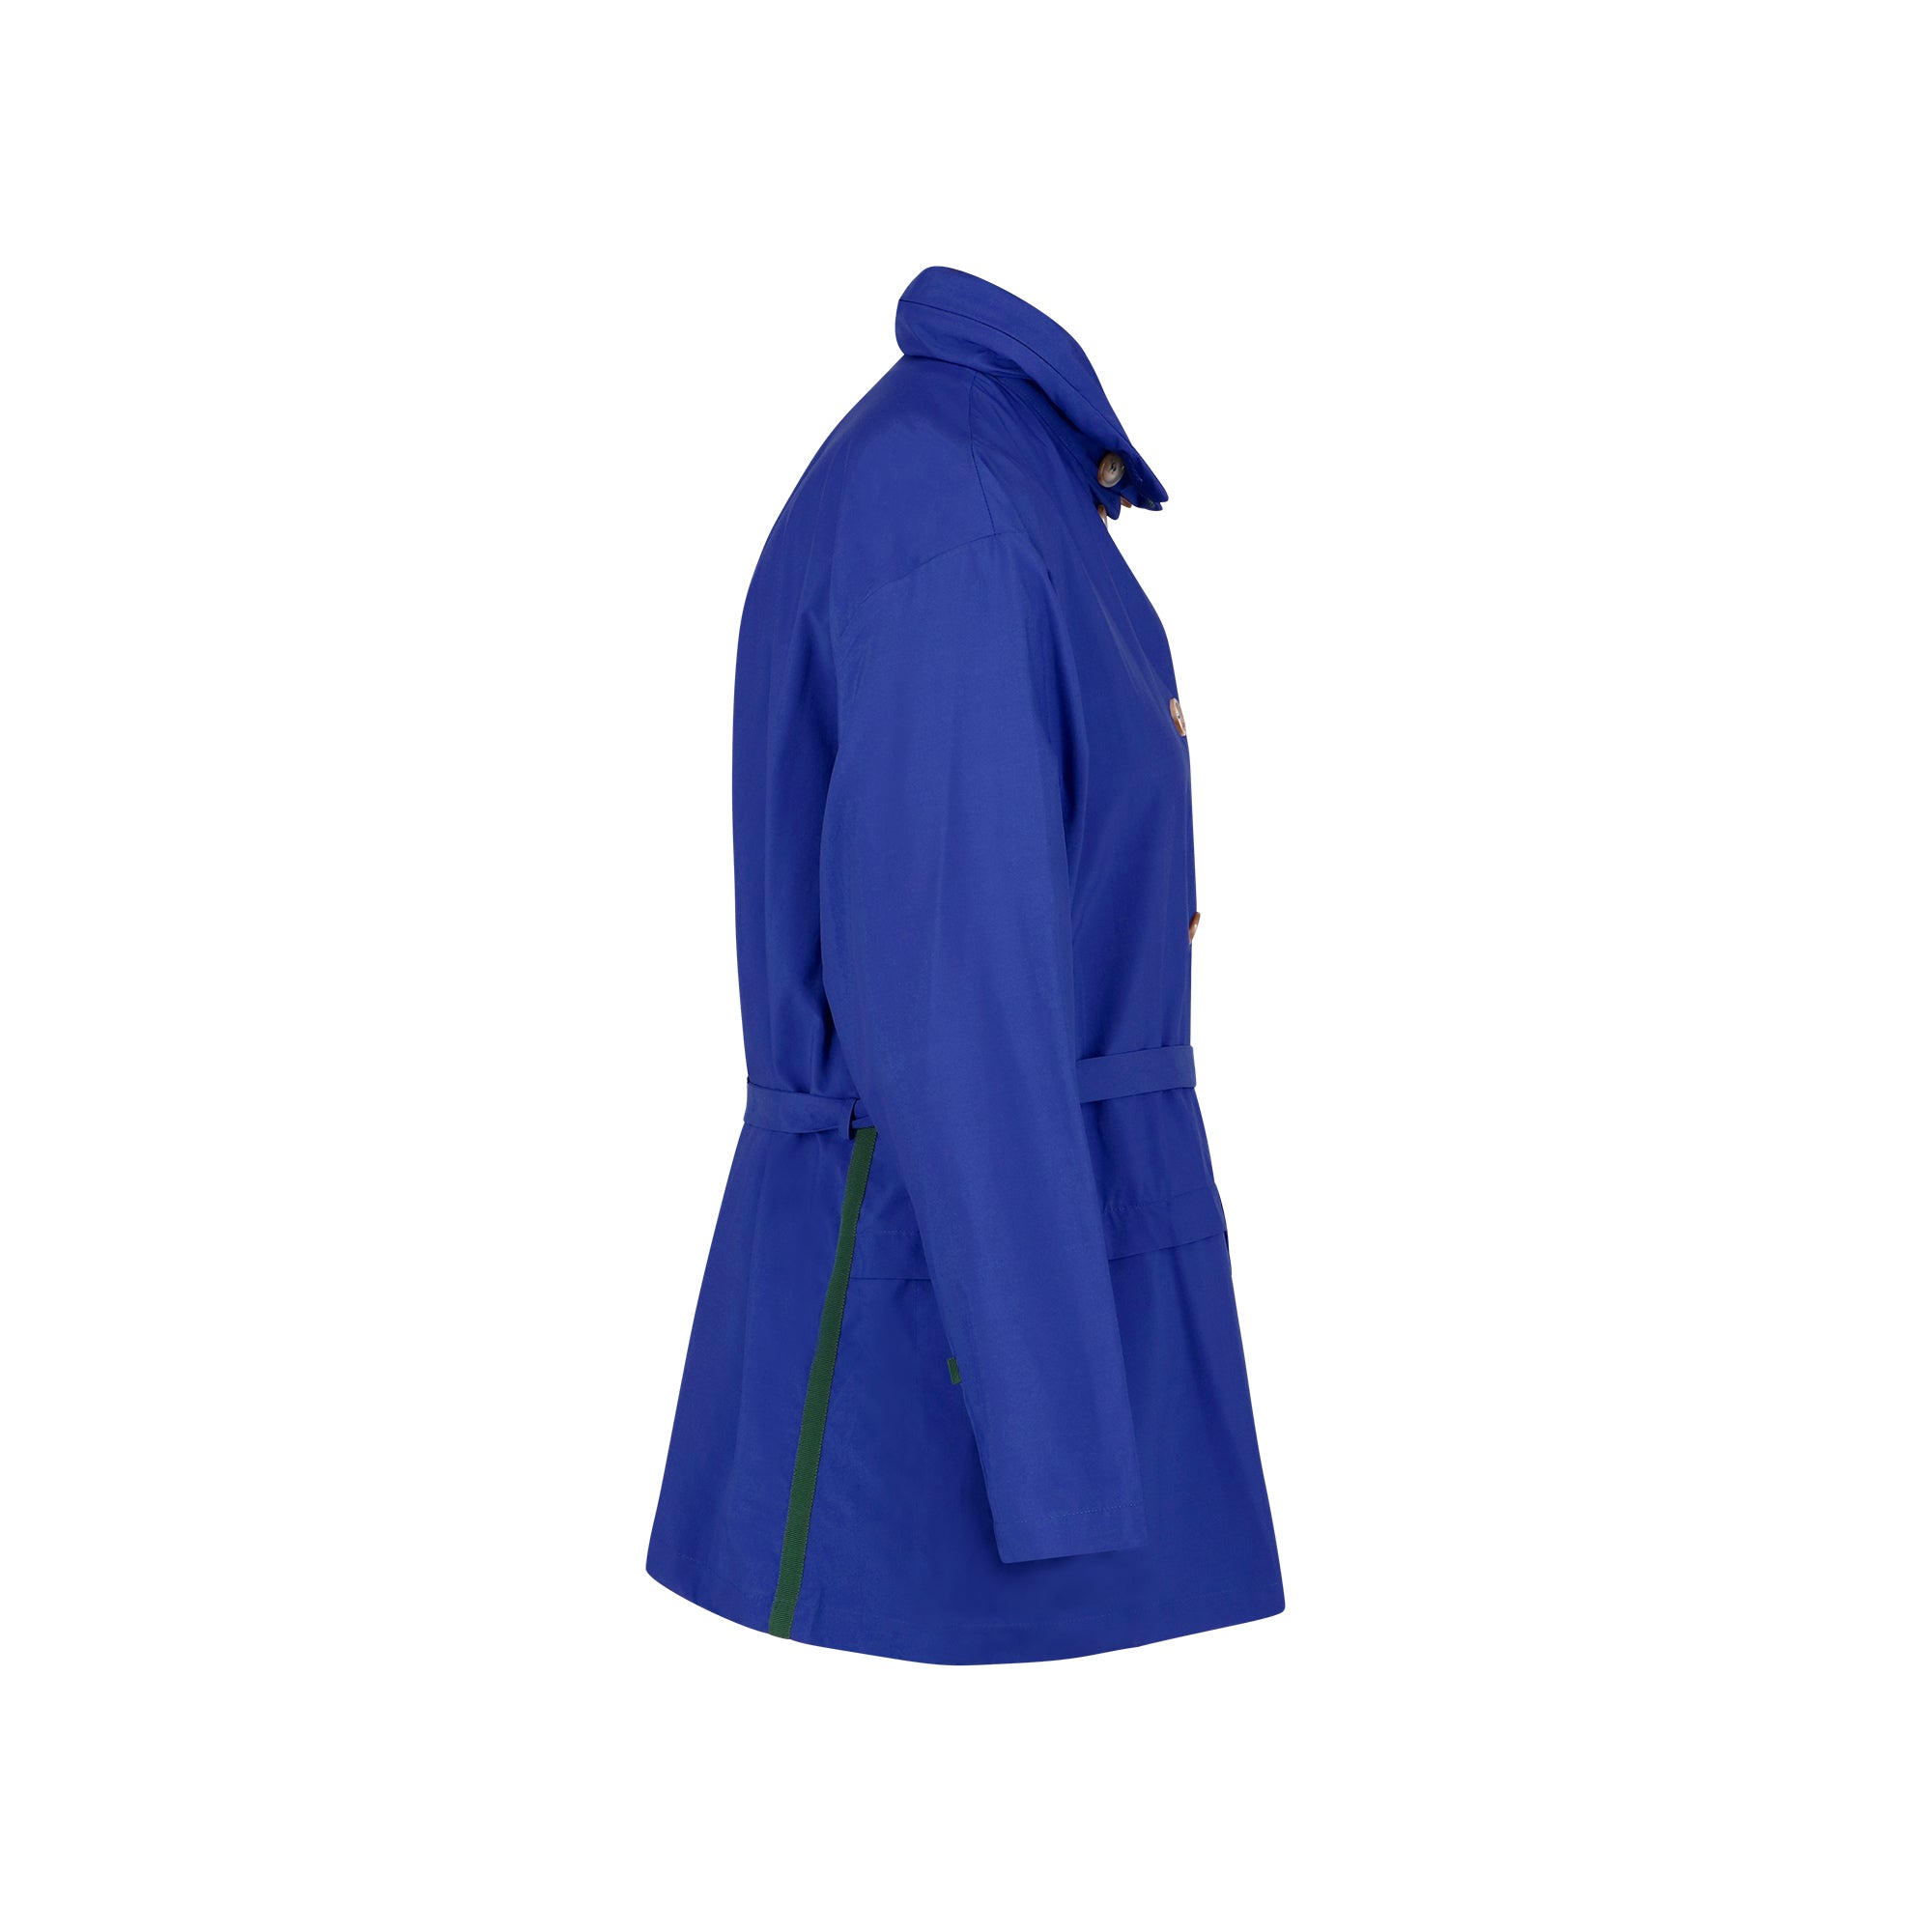 Bise raincoat - Royal Blue color - side view